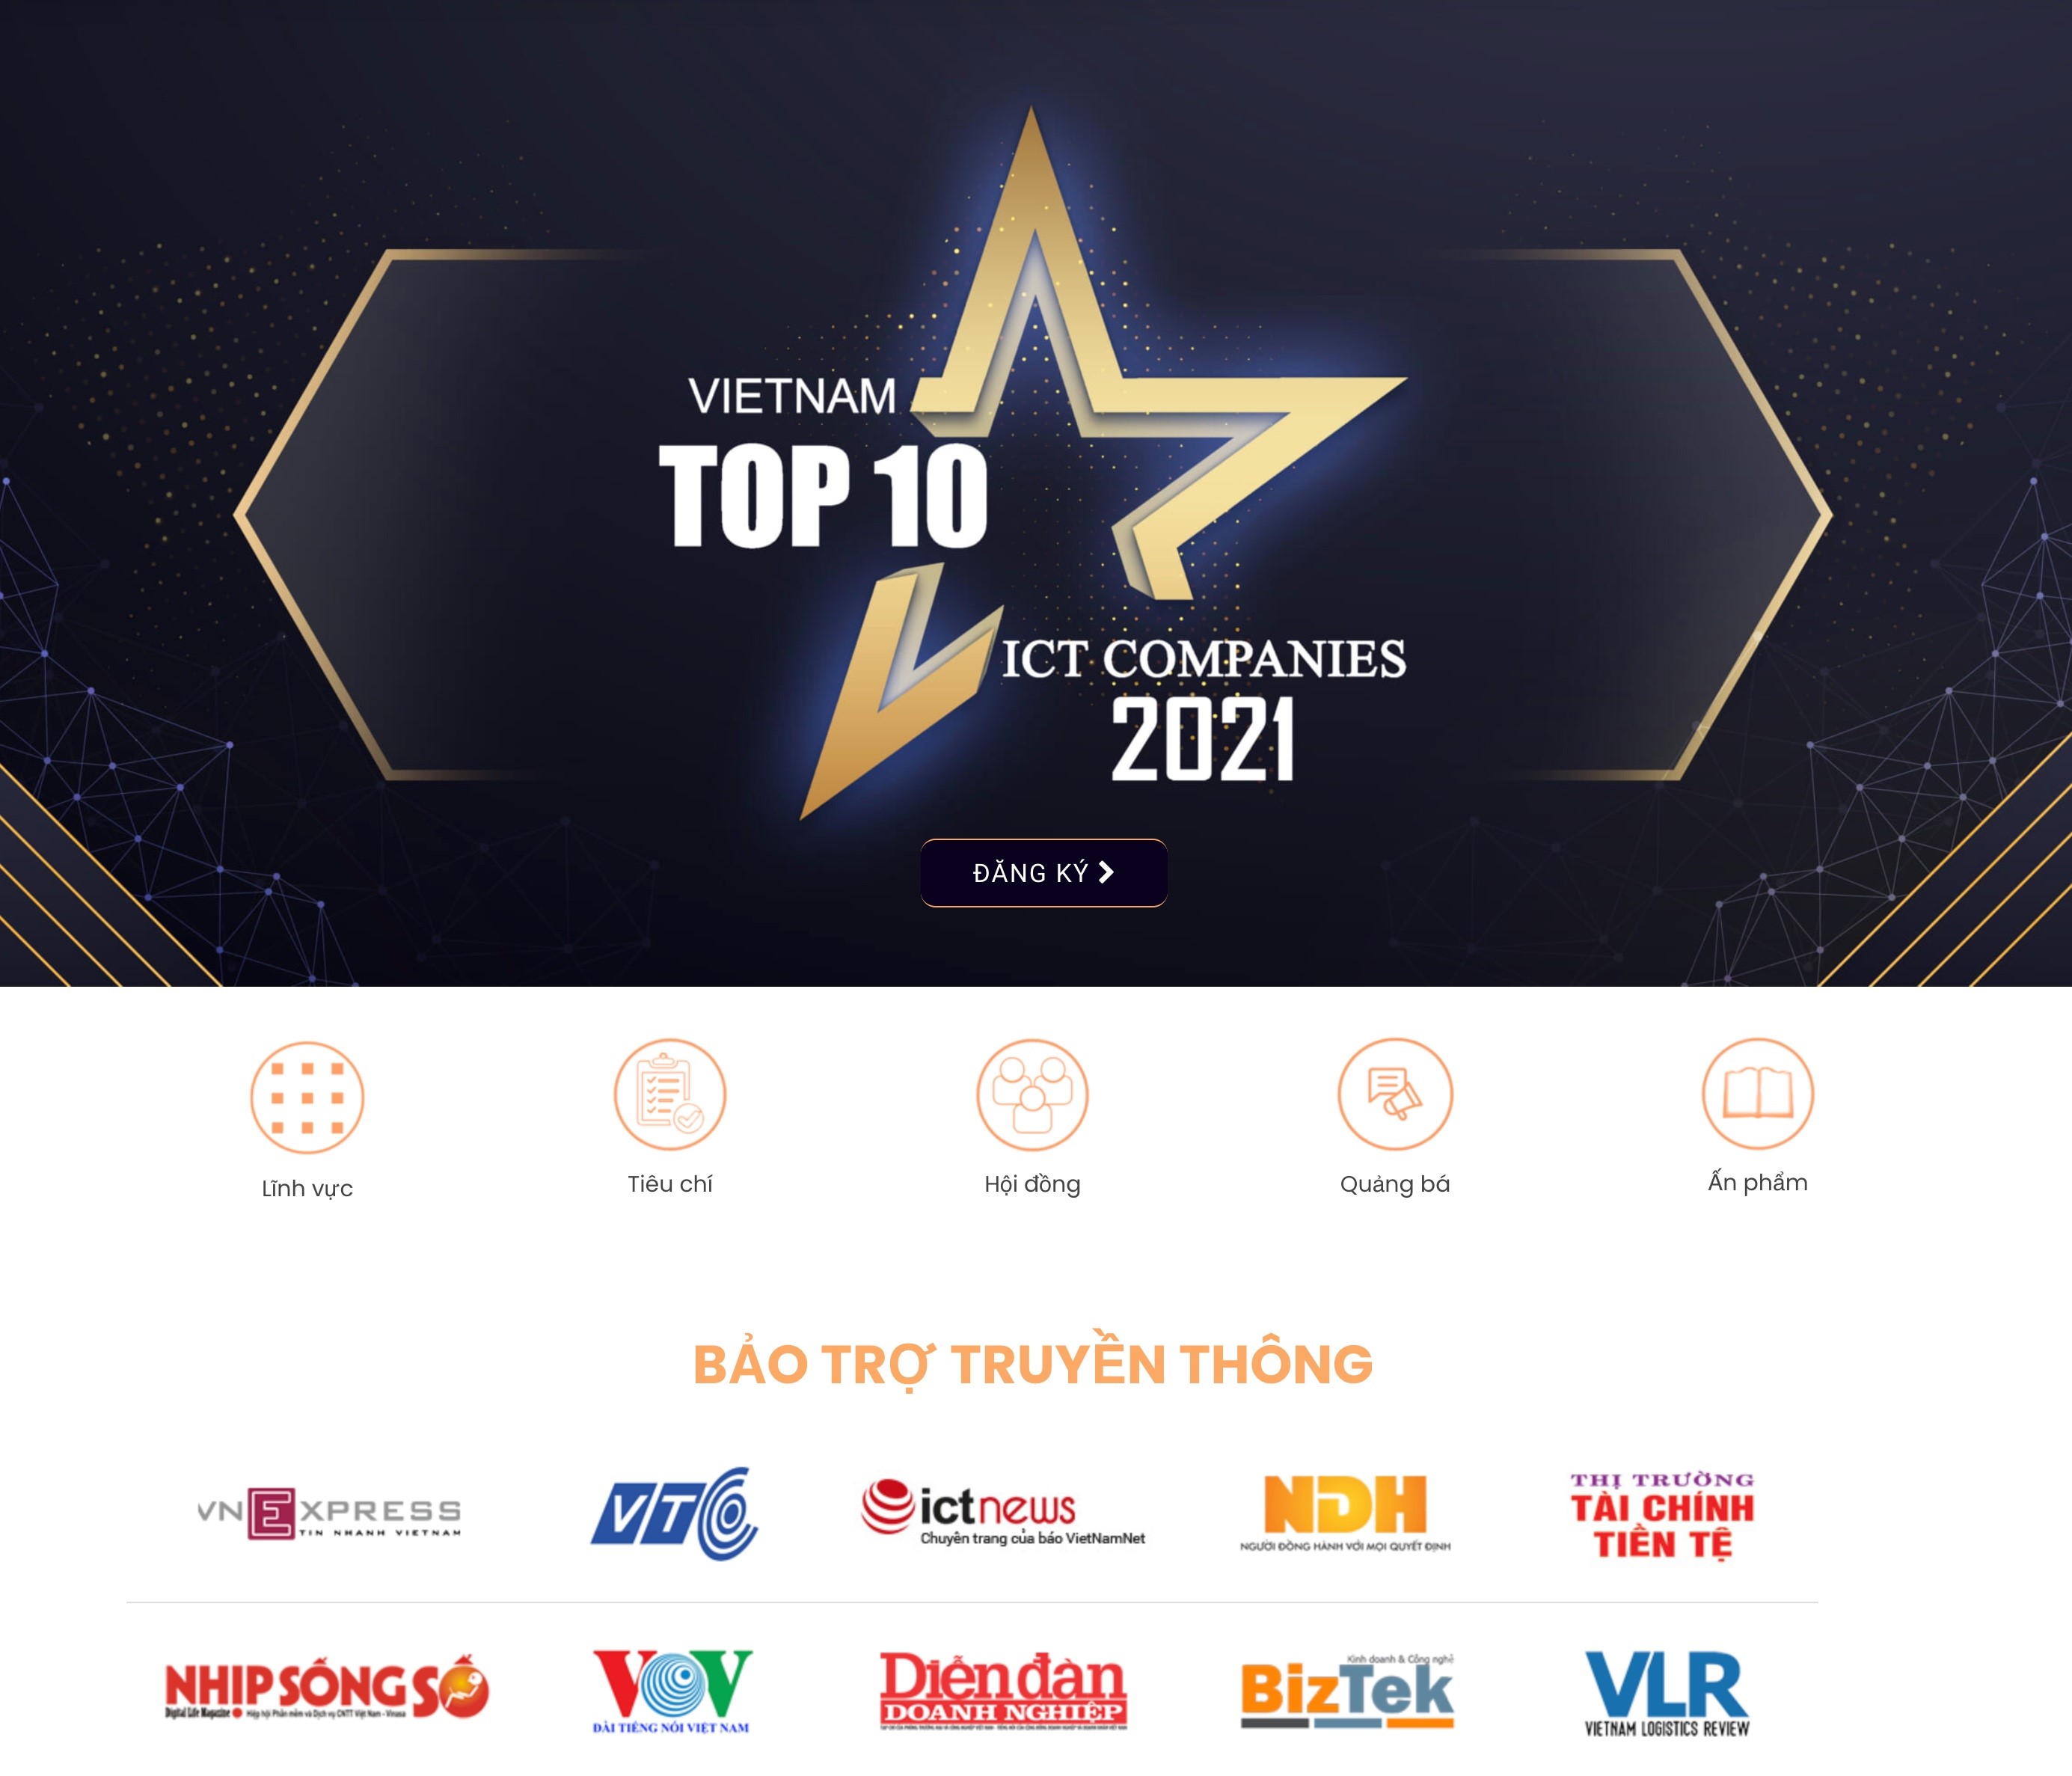 Tinhvan participates in TOP 10 Vietnam IT Enterprises 2021